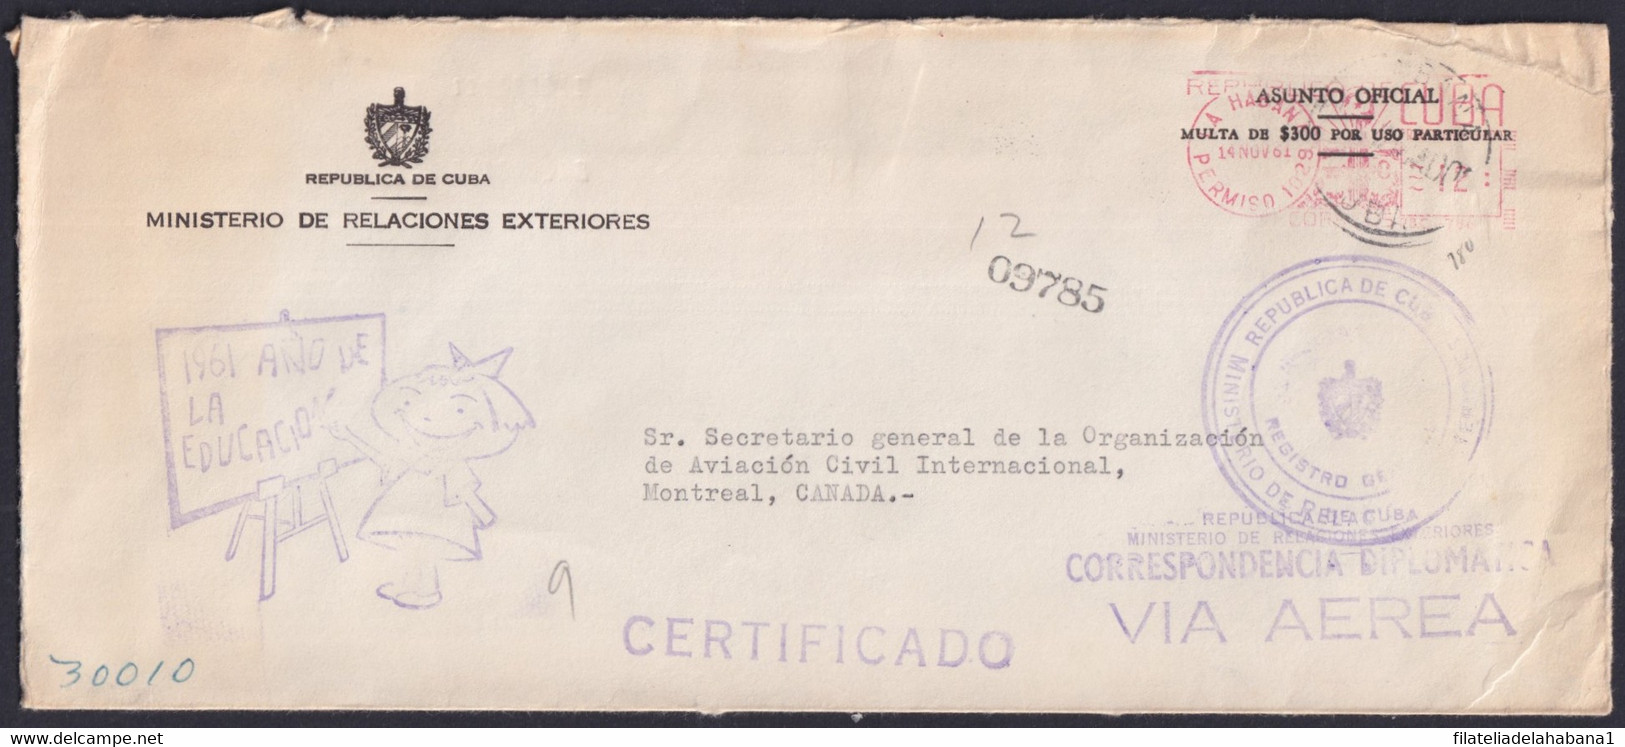 FM-141 CUBA LG2153 1961 PITNEY BOWES DIPLOMATIC COVER PERMISO 1029 MINREX EDUCATION SPECIAL CANCEL. - Frankeervignetten (Frama)